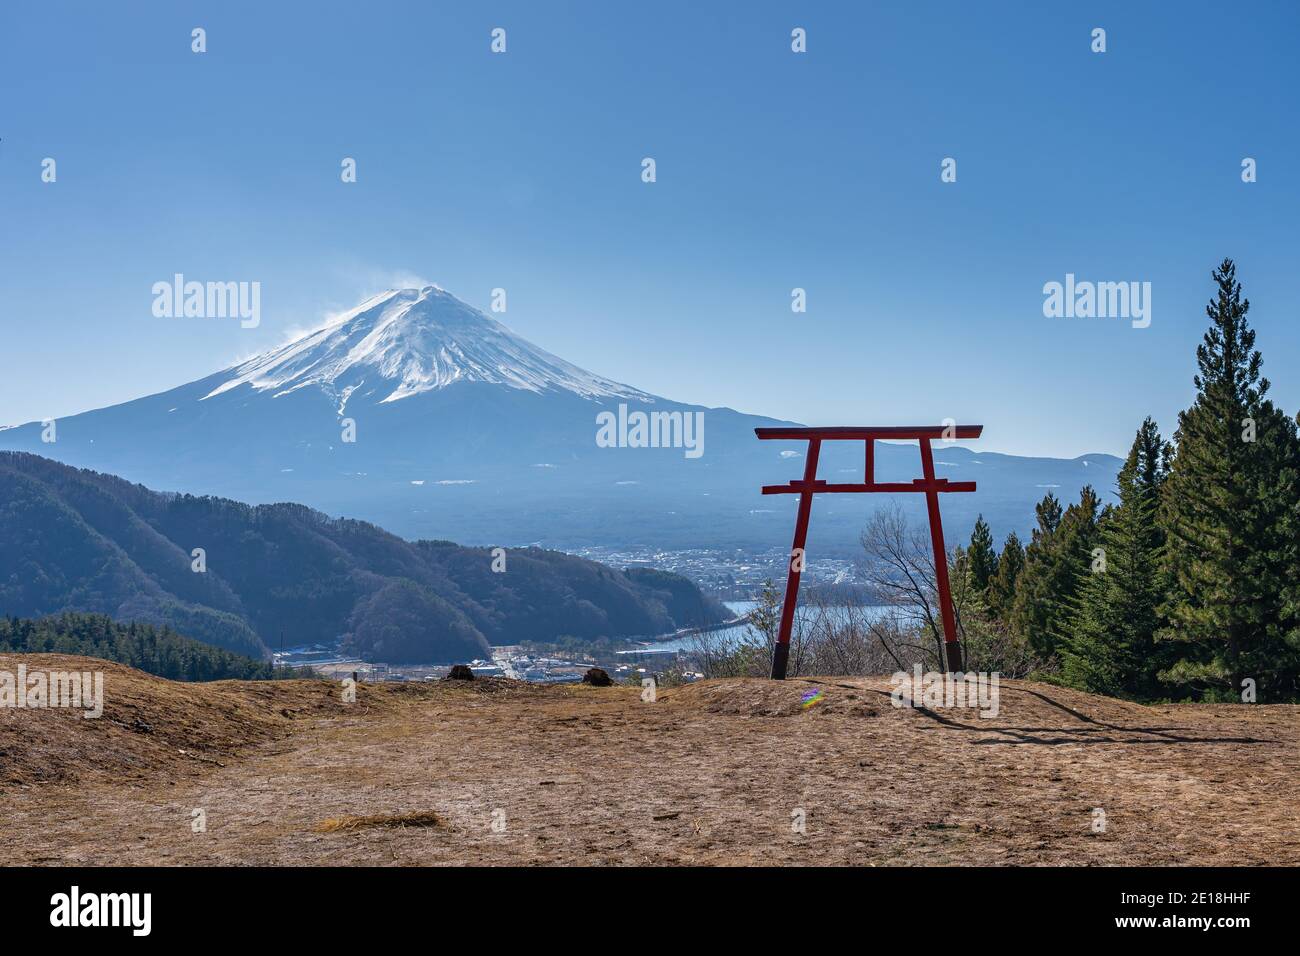 Mount Fuji with Torii gate of Asama Shrine in Kawaguchiko, Japan. Stock Photo